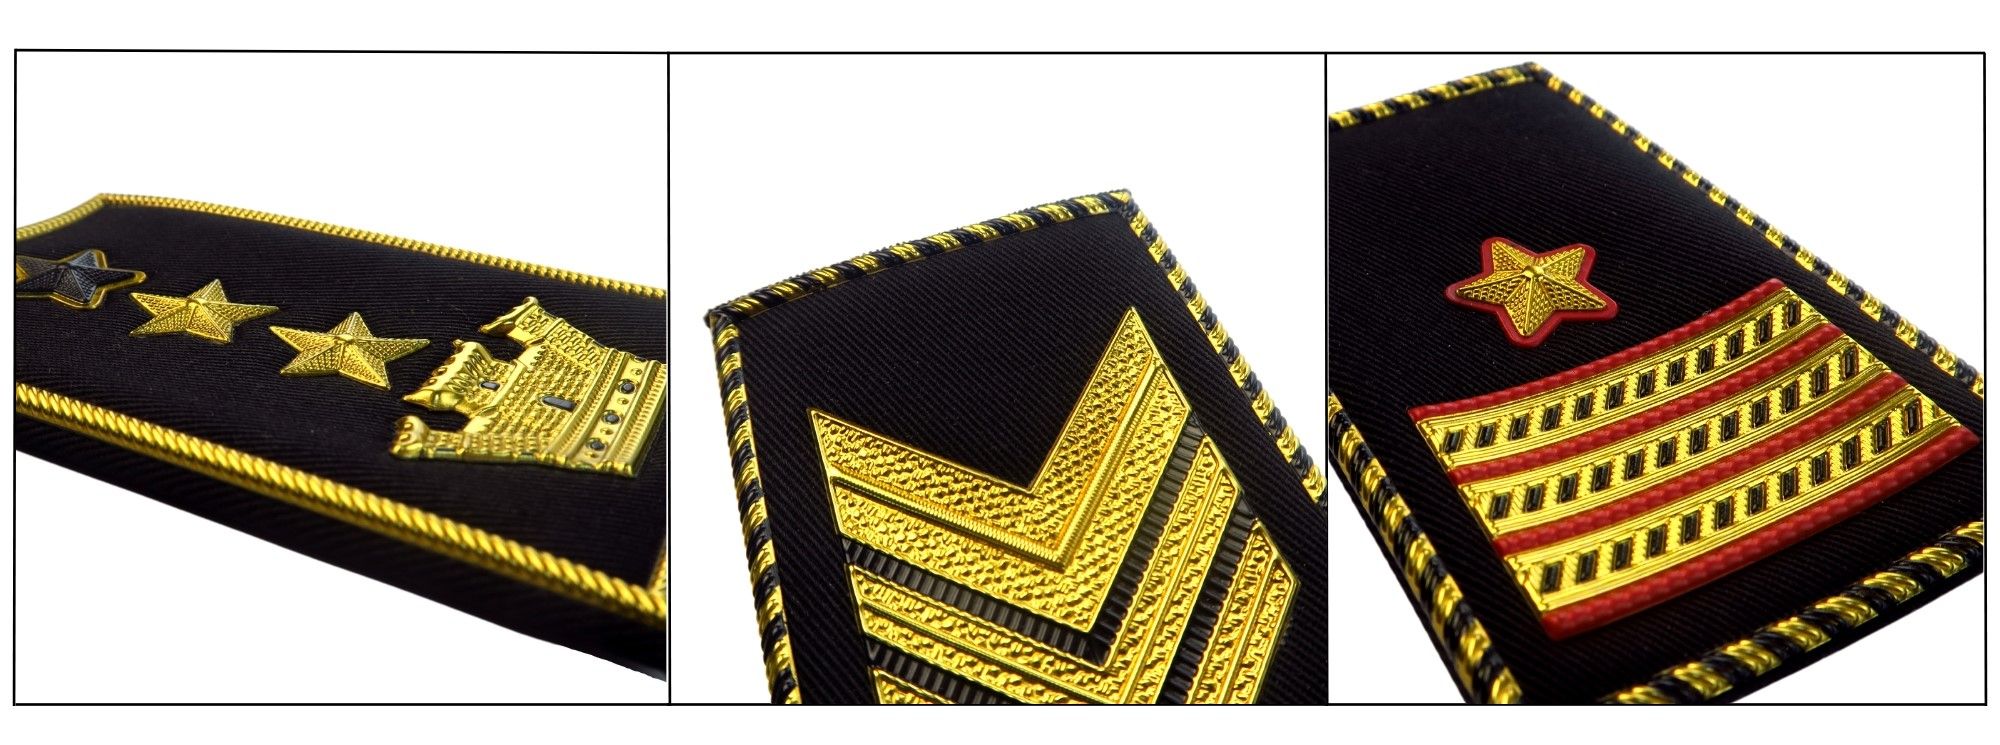 Lederskab symboliseret, søfartskommando skræddersyet i kaptajn-epåletter.